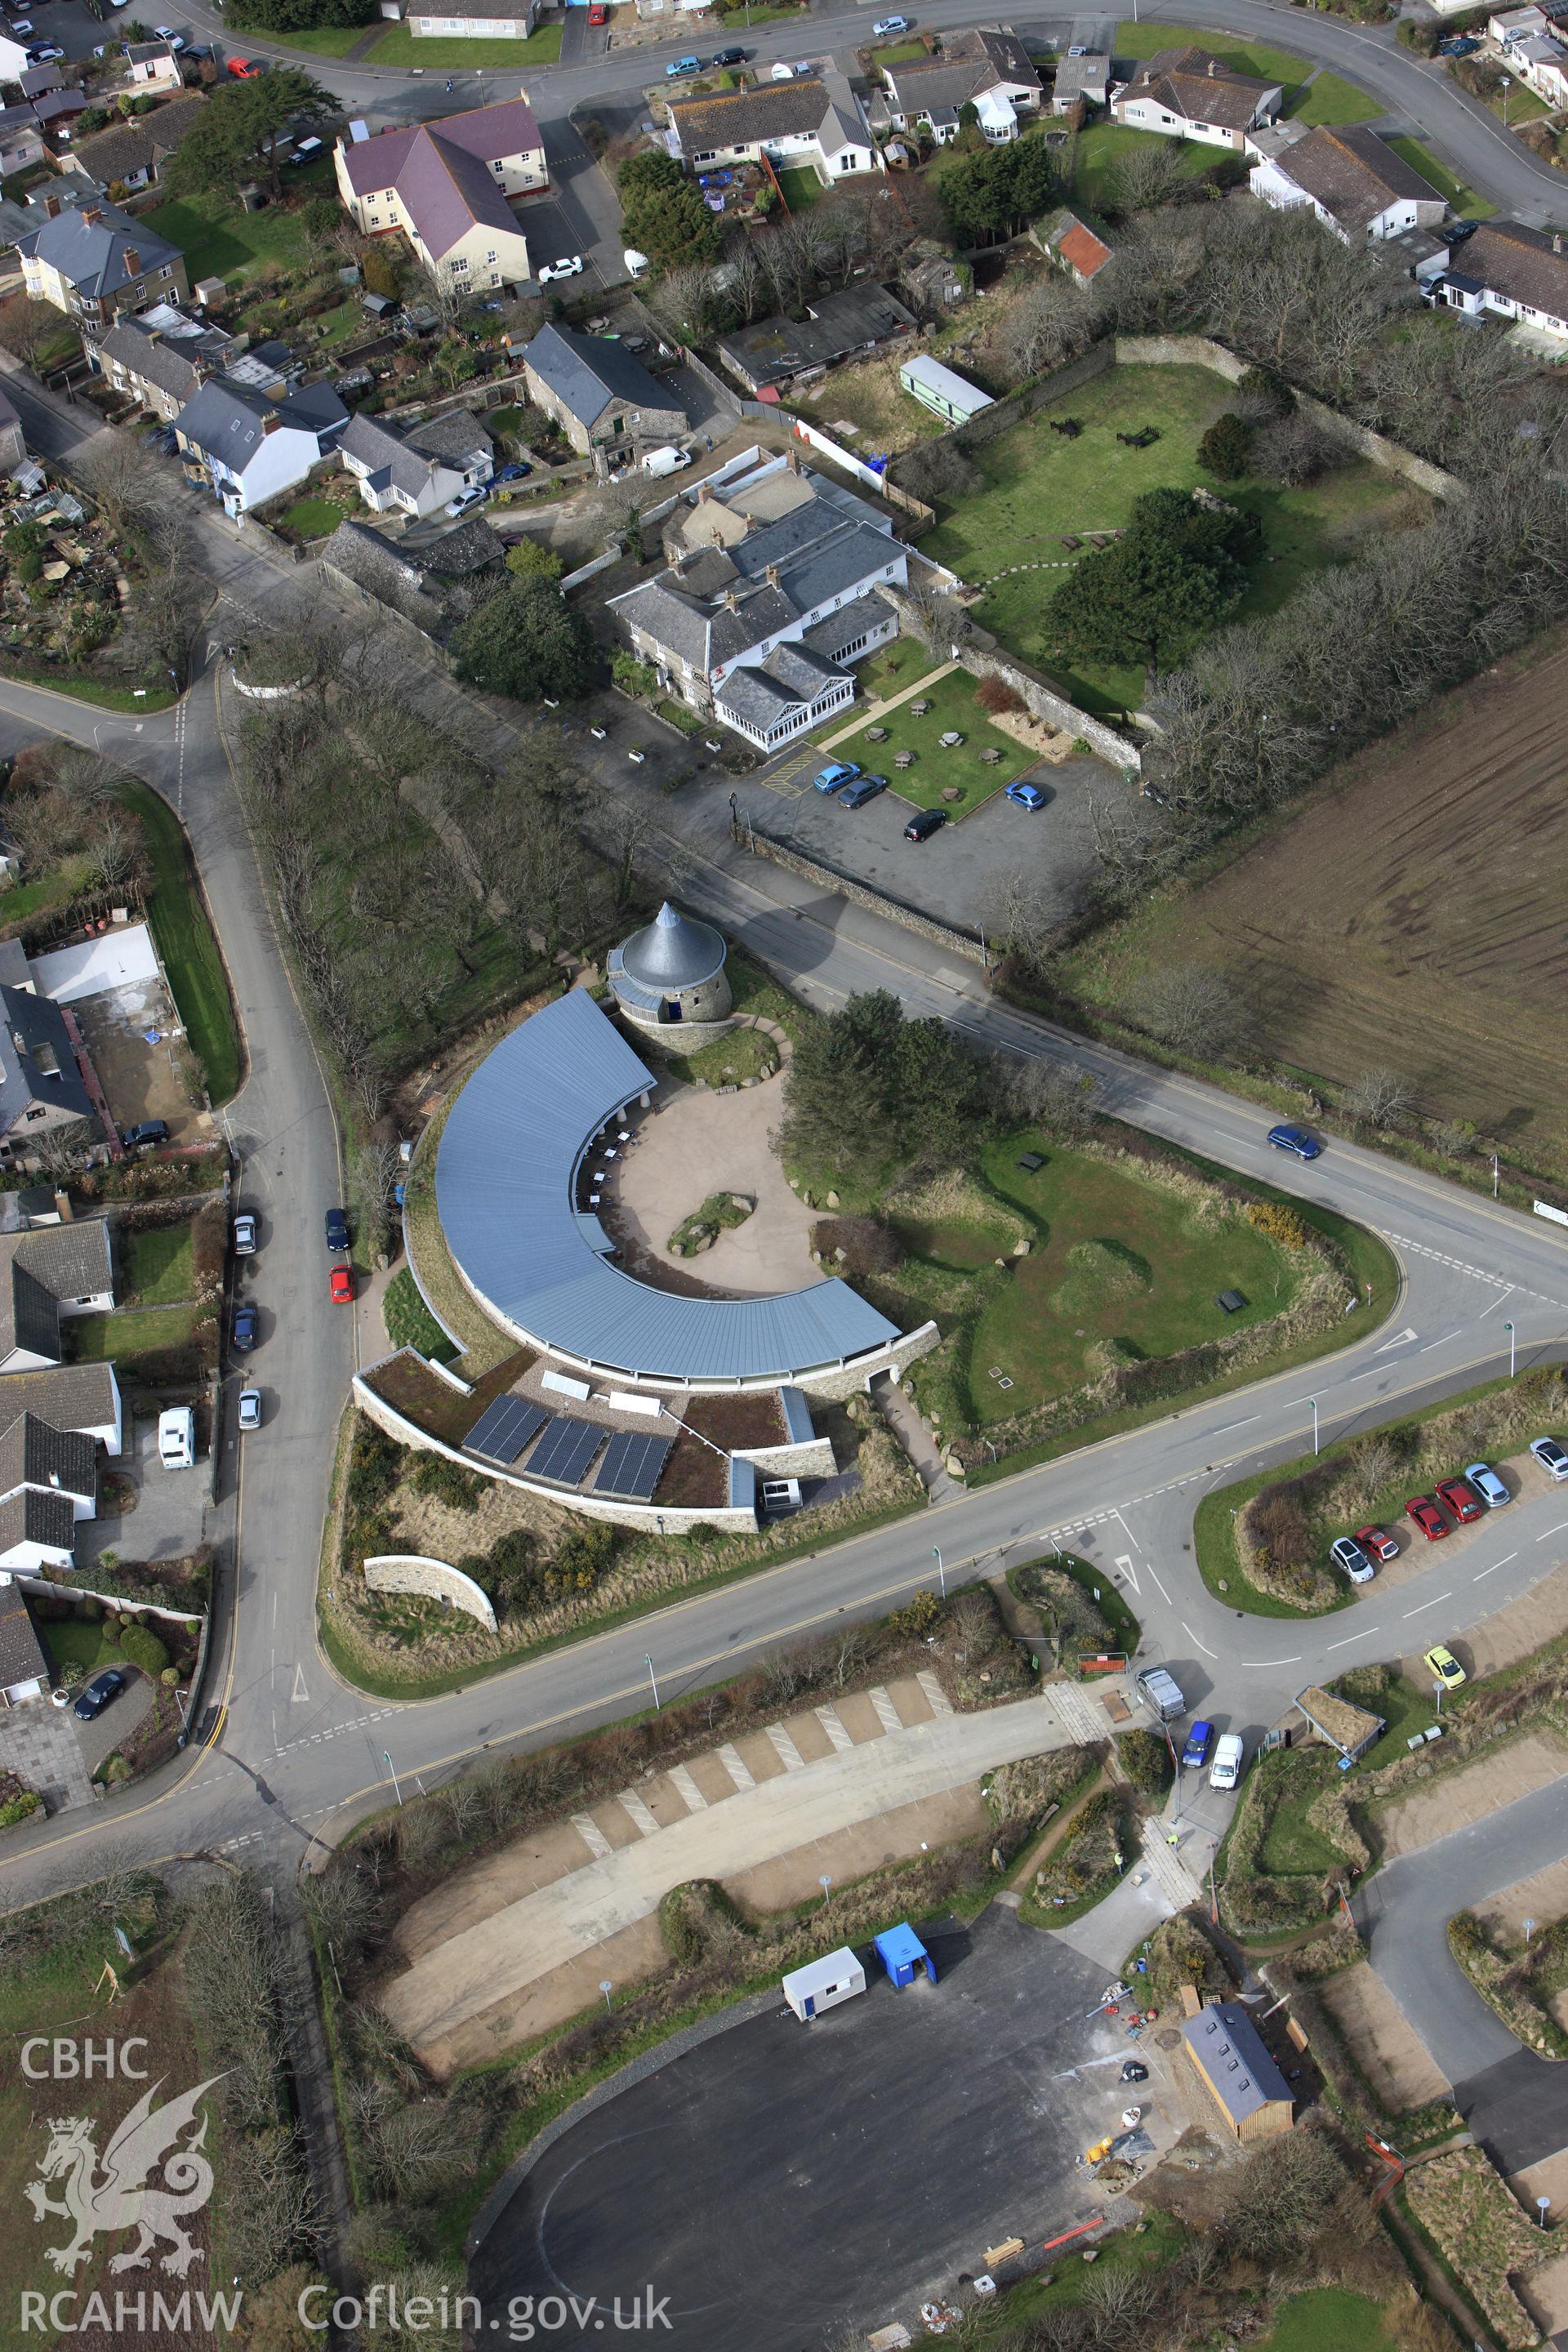 RCAHMW colour oblique aerial photograph of St David's Visitor Centre, Oriel y Parc Landscape Gallery. Taken on 02 March 2010 by Toby Driver